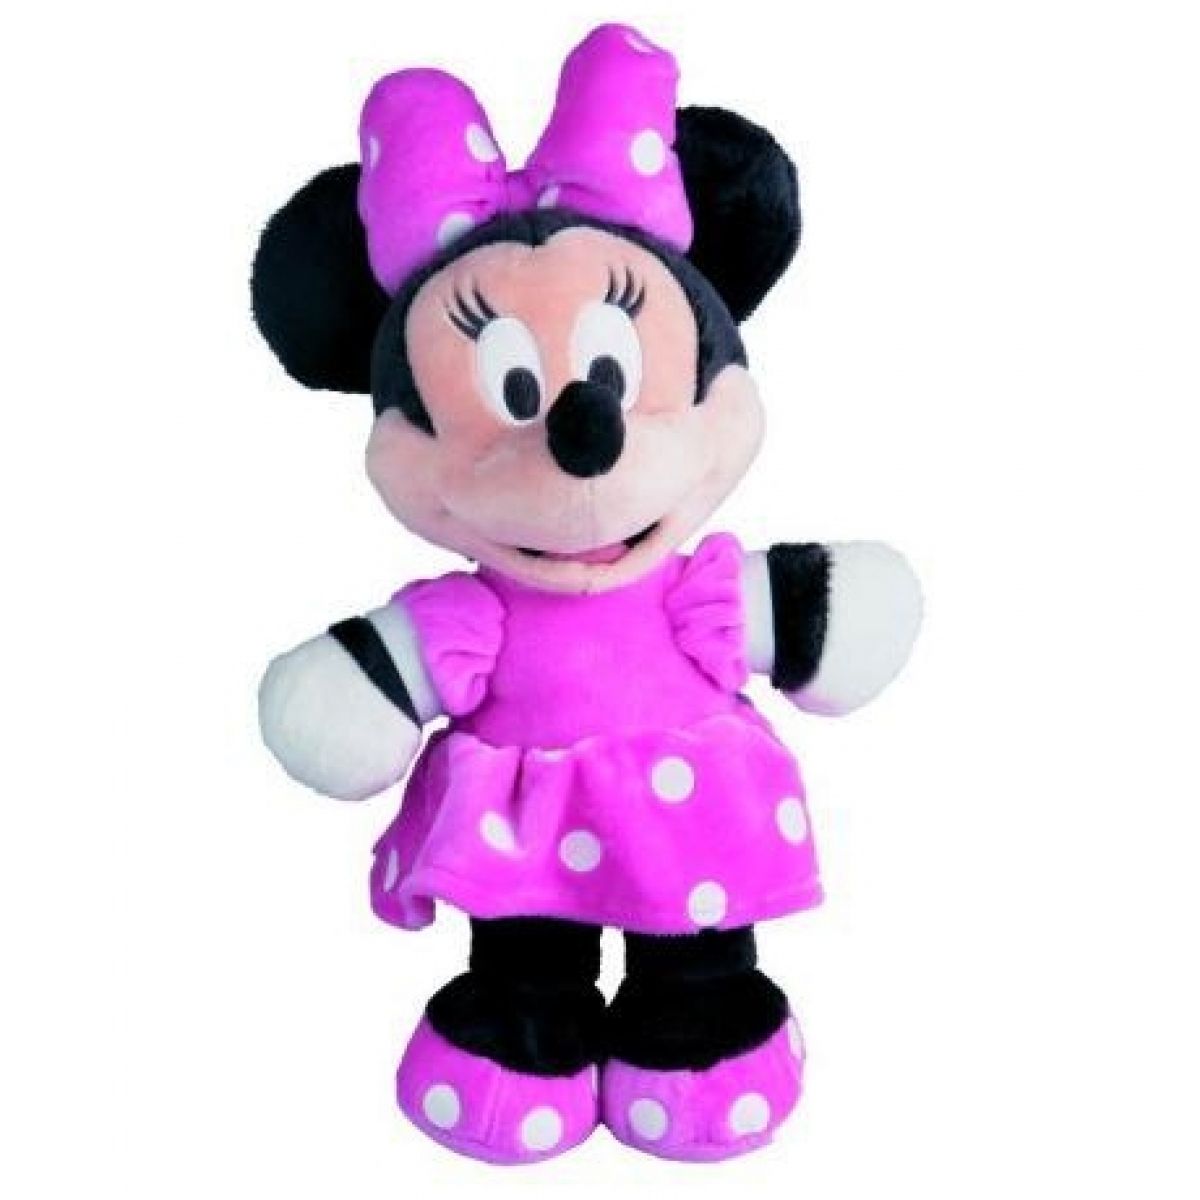 Disney plyš 25cm - Minnie Flopsies